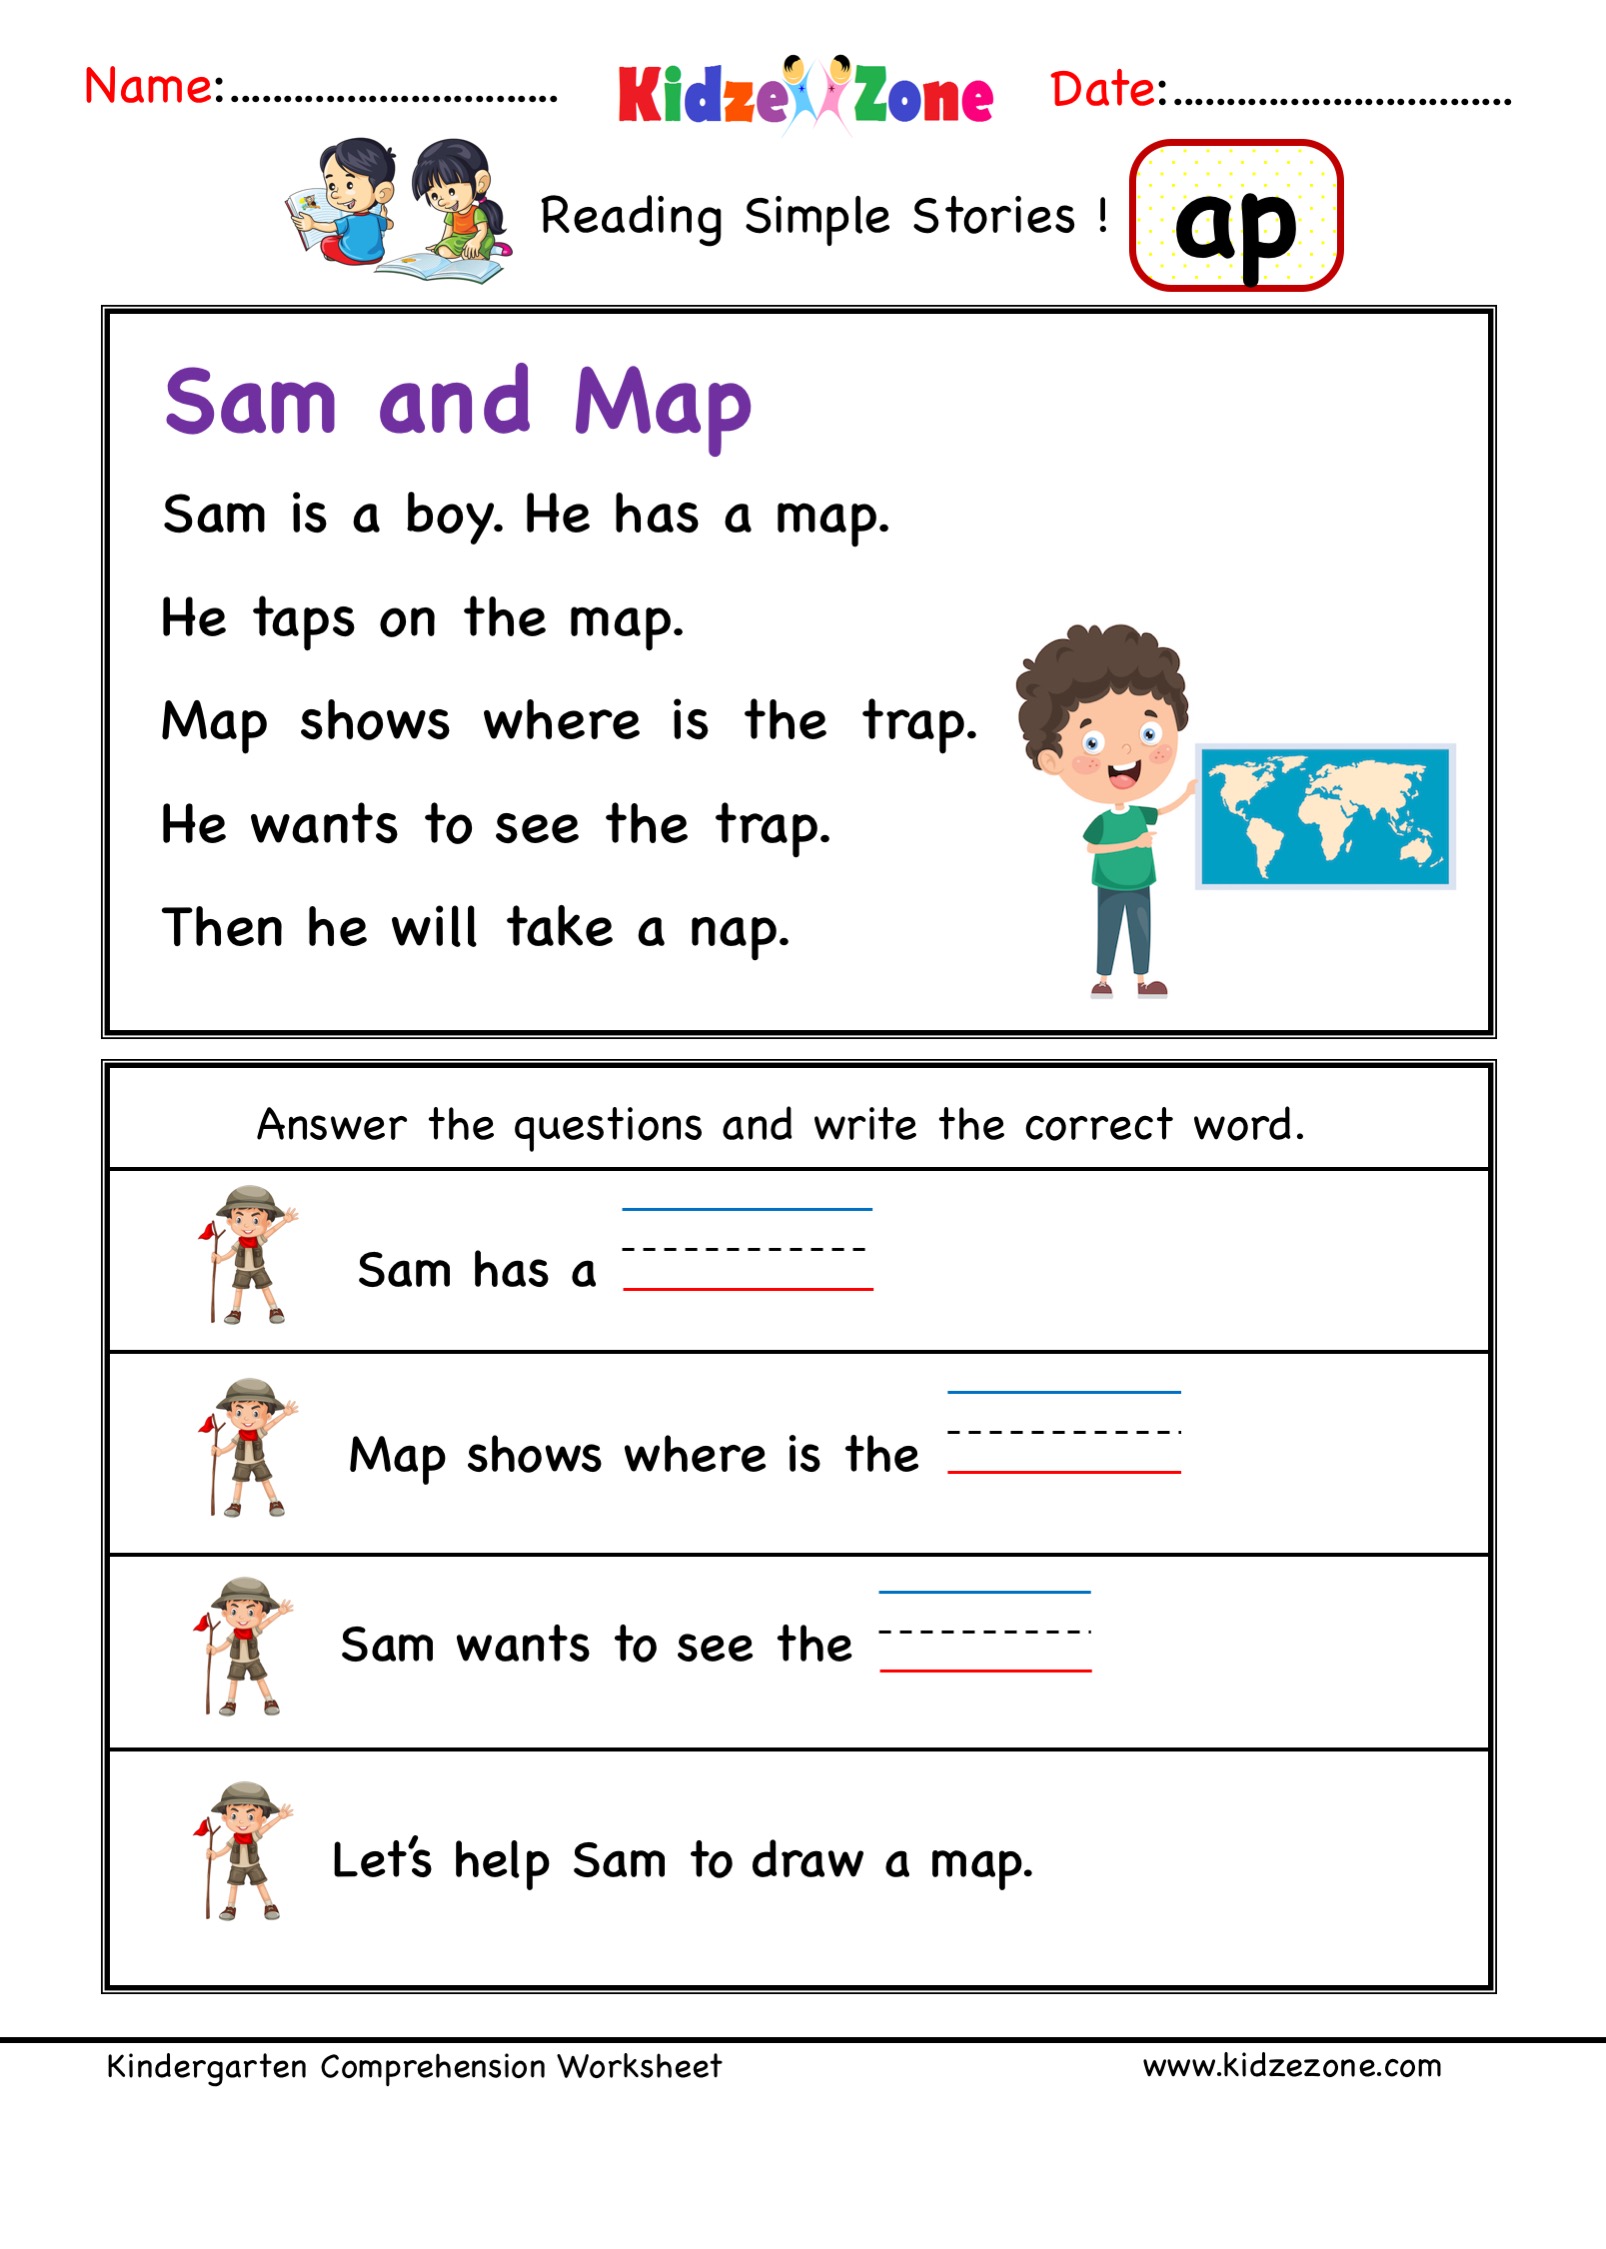 Kindergarten worksheets - ap word family - reading Comprehension